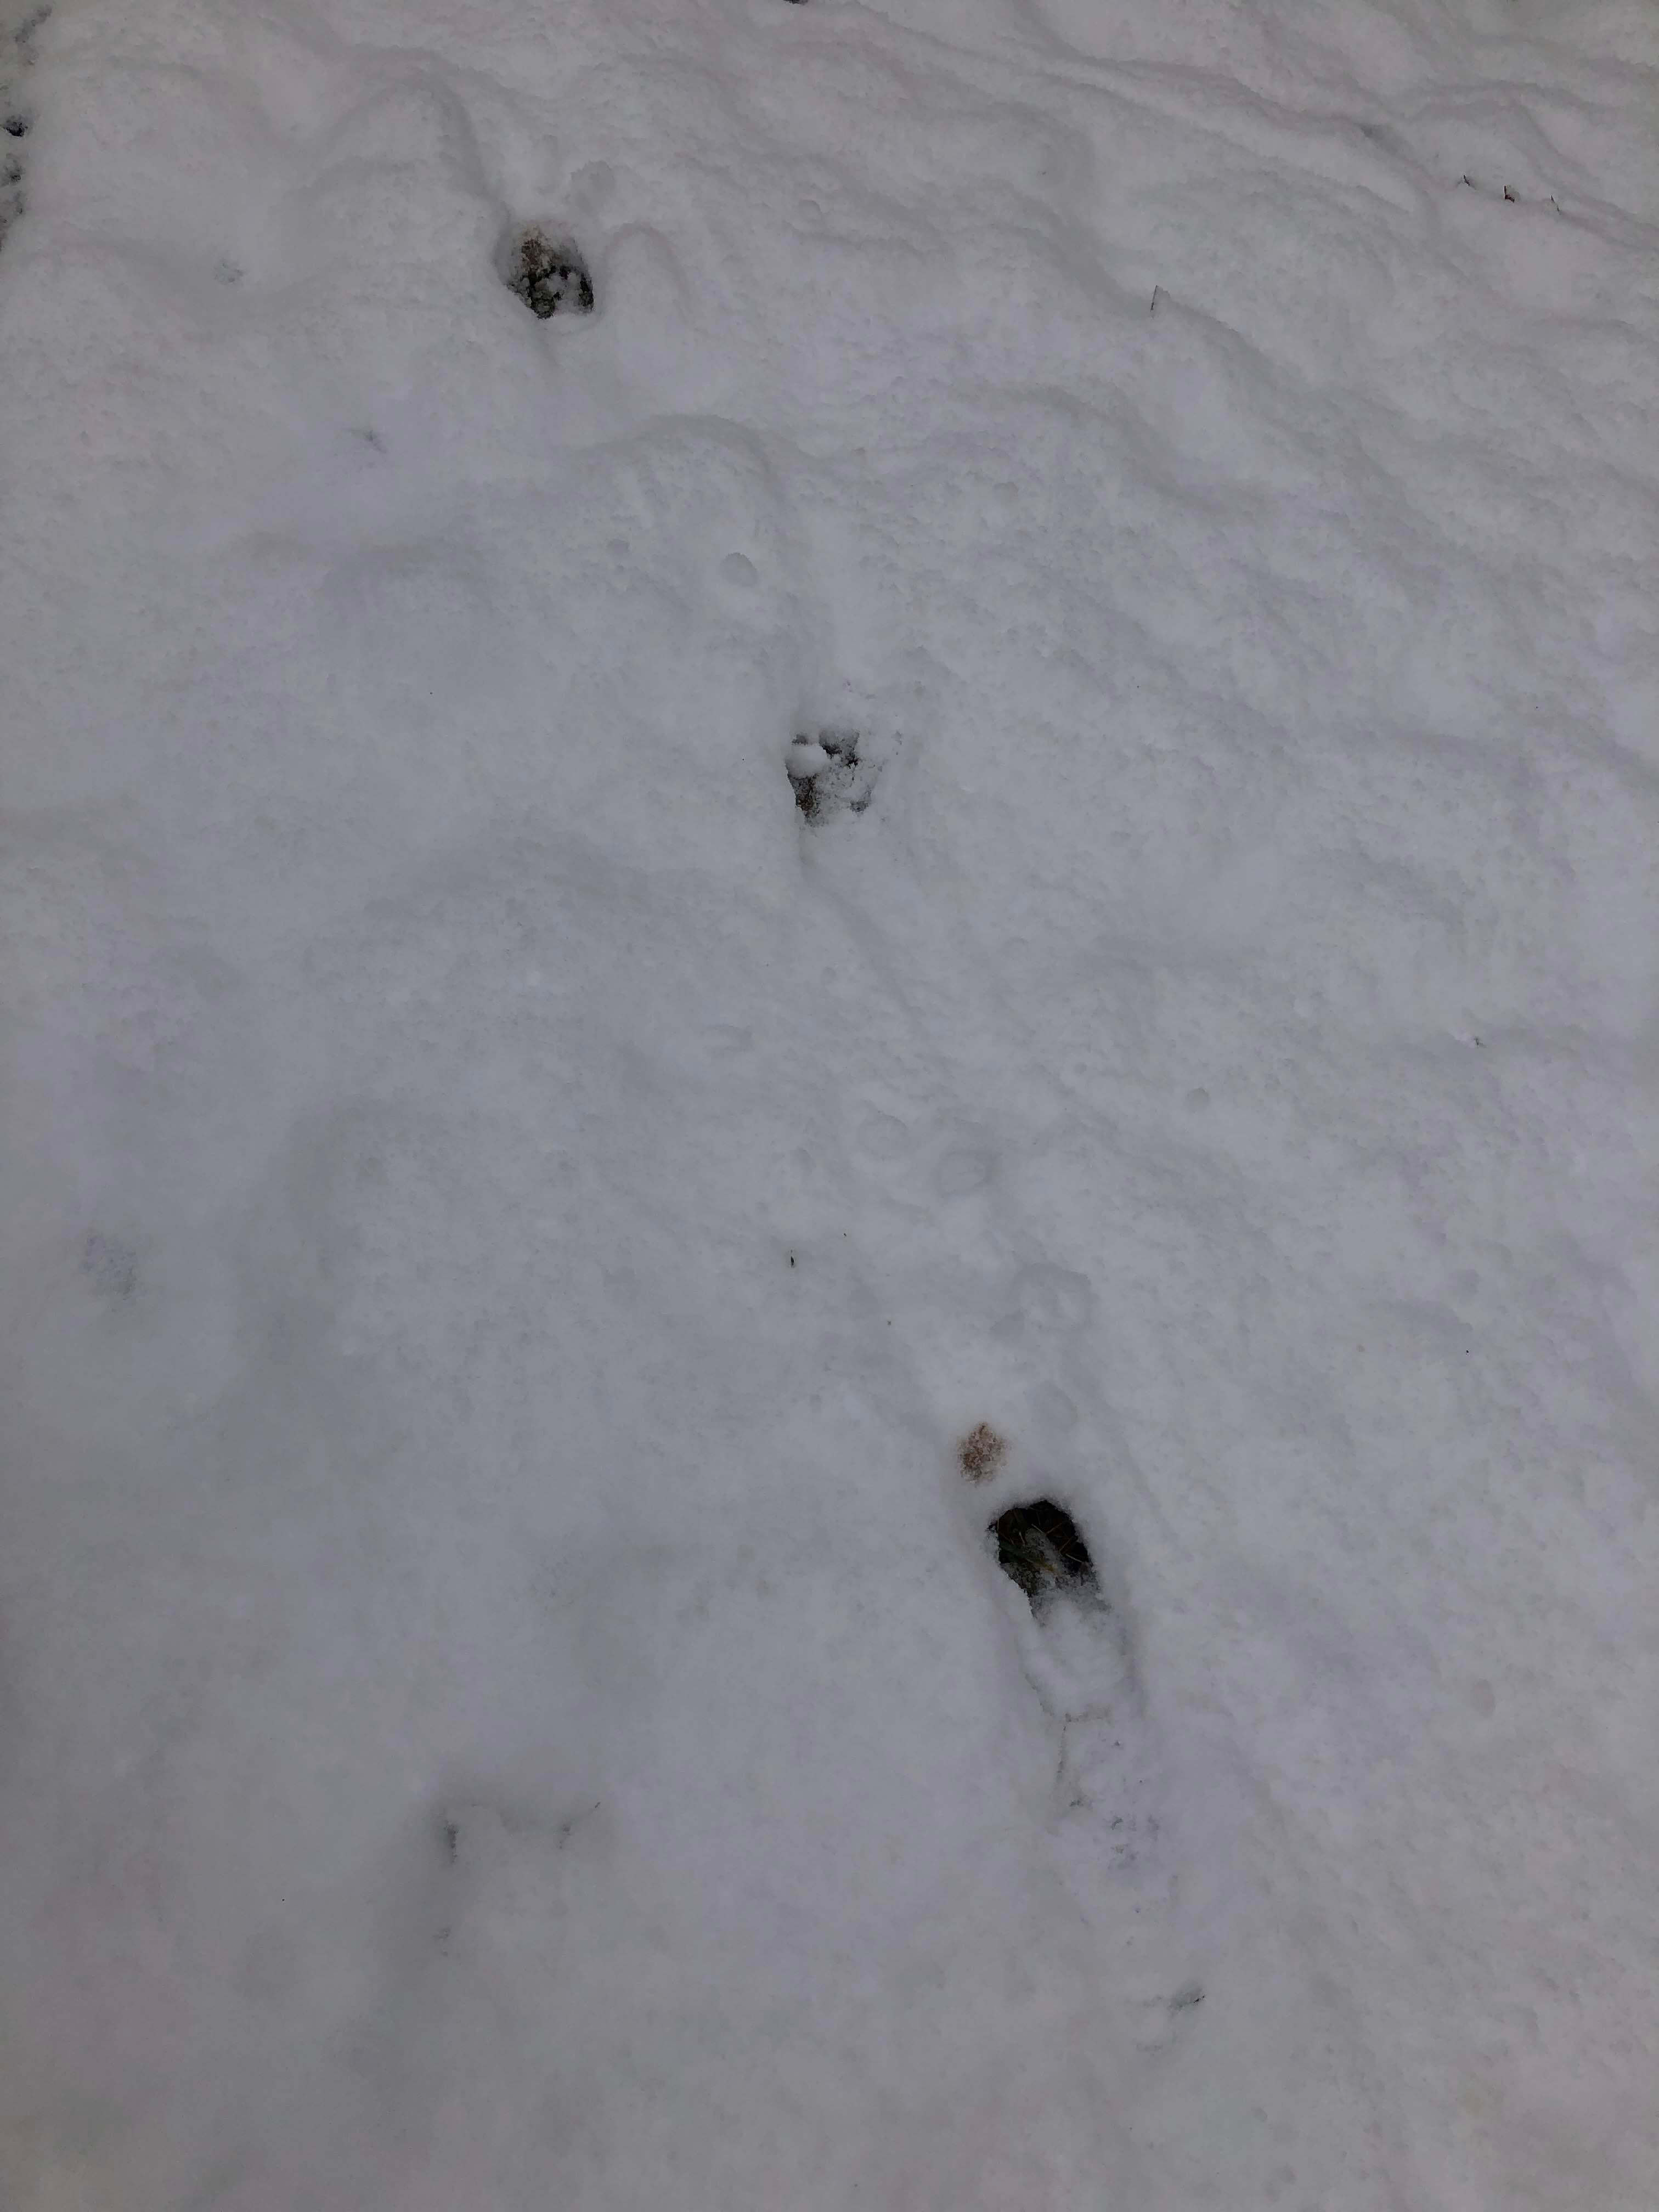 deer prints in freshly fallen snow